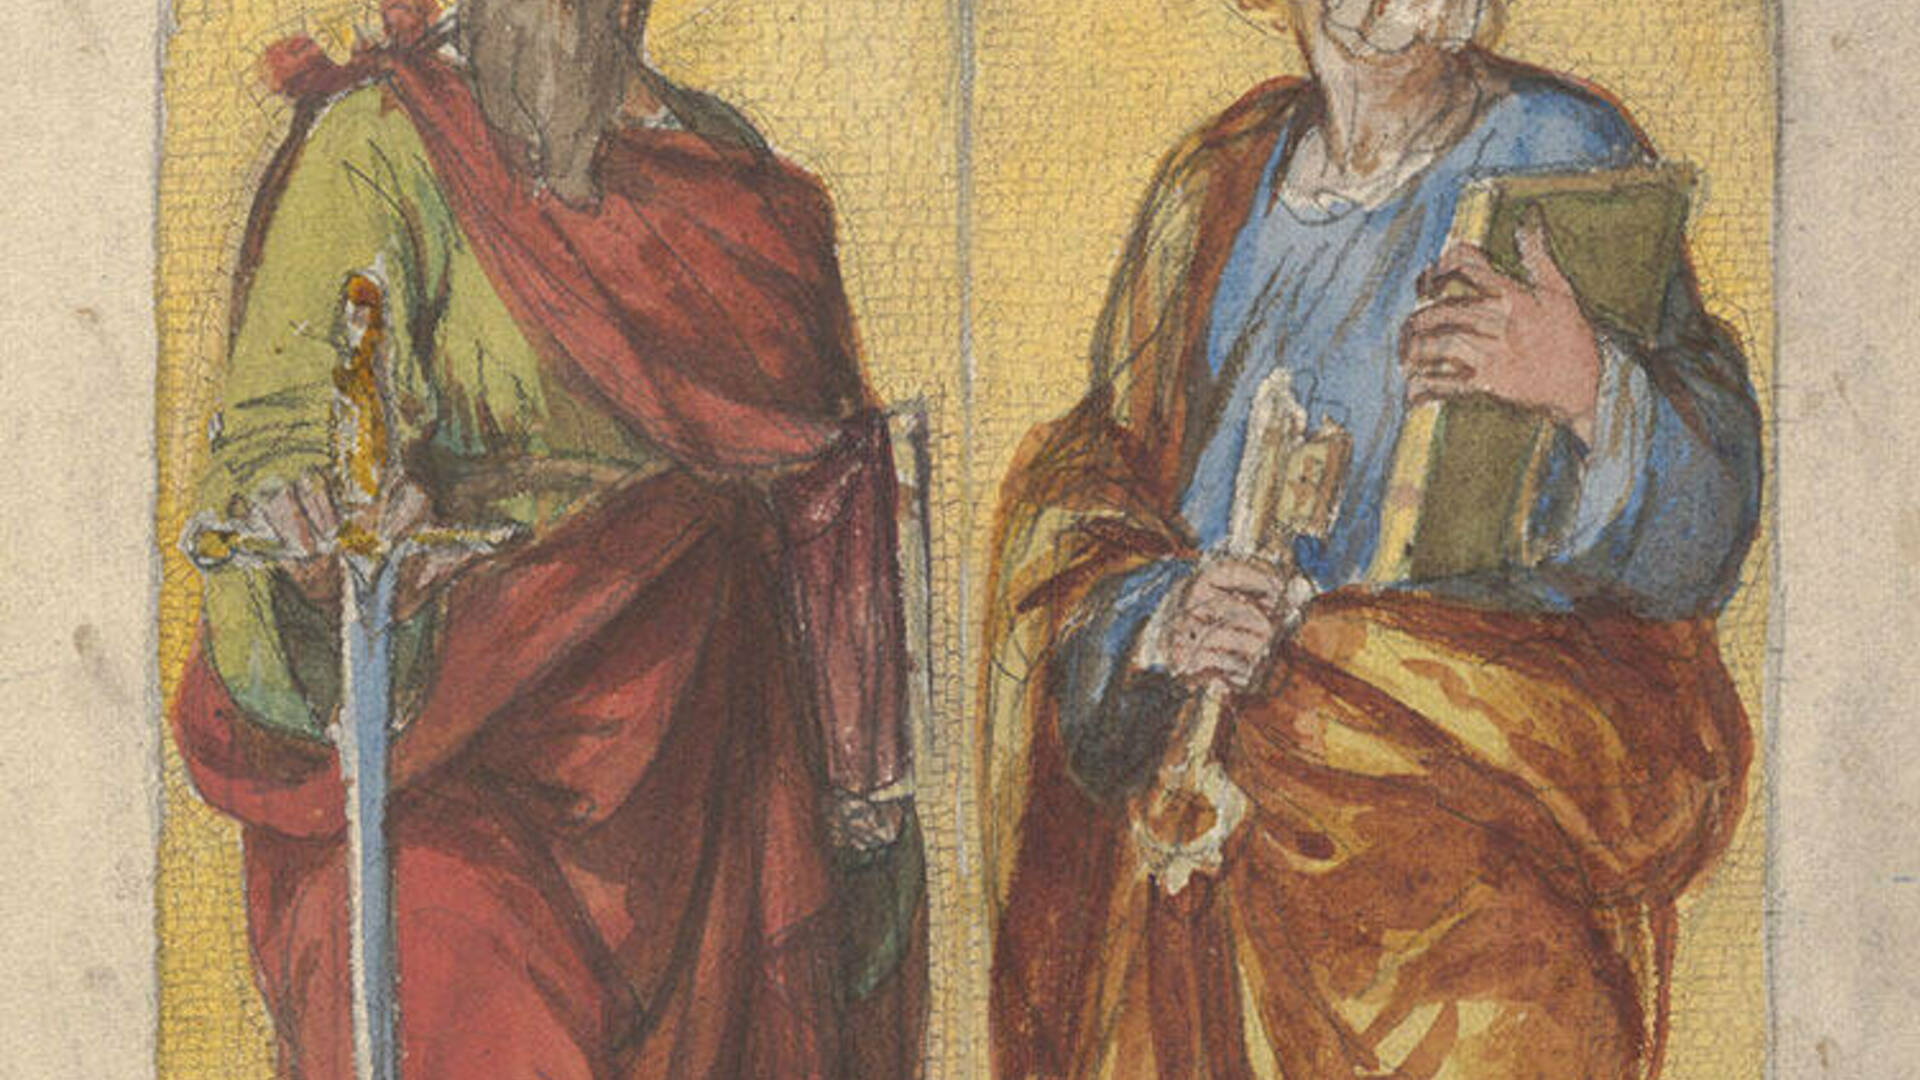 Luigi Gregori (Italian 1819-1896), Saint Paul and Saint Peter, 1874–78, watercolor and gouache over black chalk on wove paper. Gift of the artist, 1977.005.020.DD